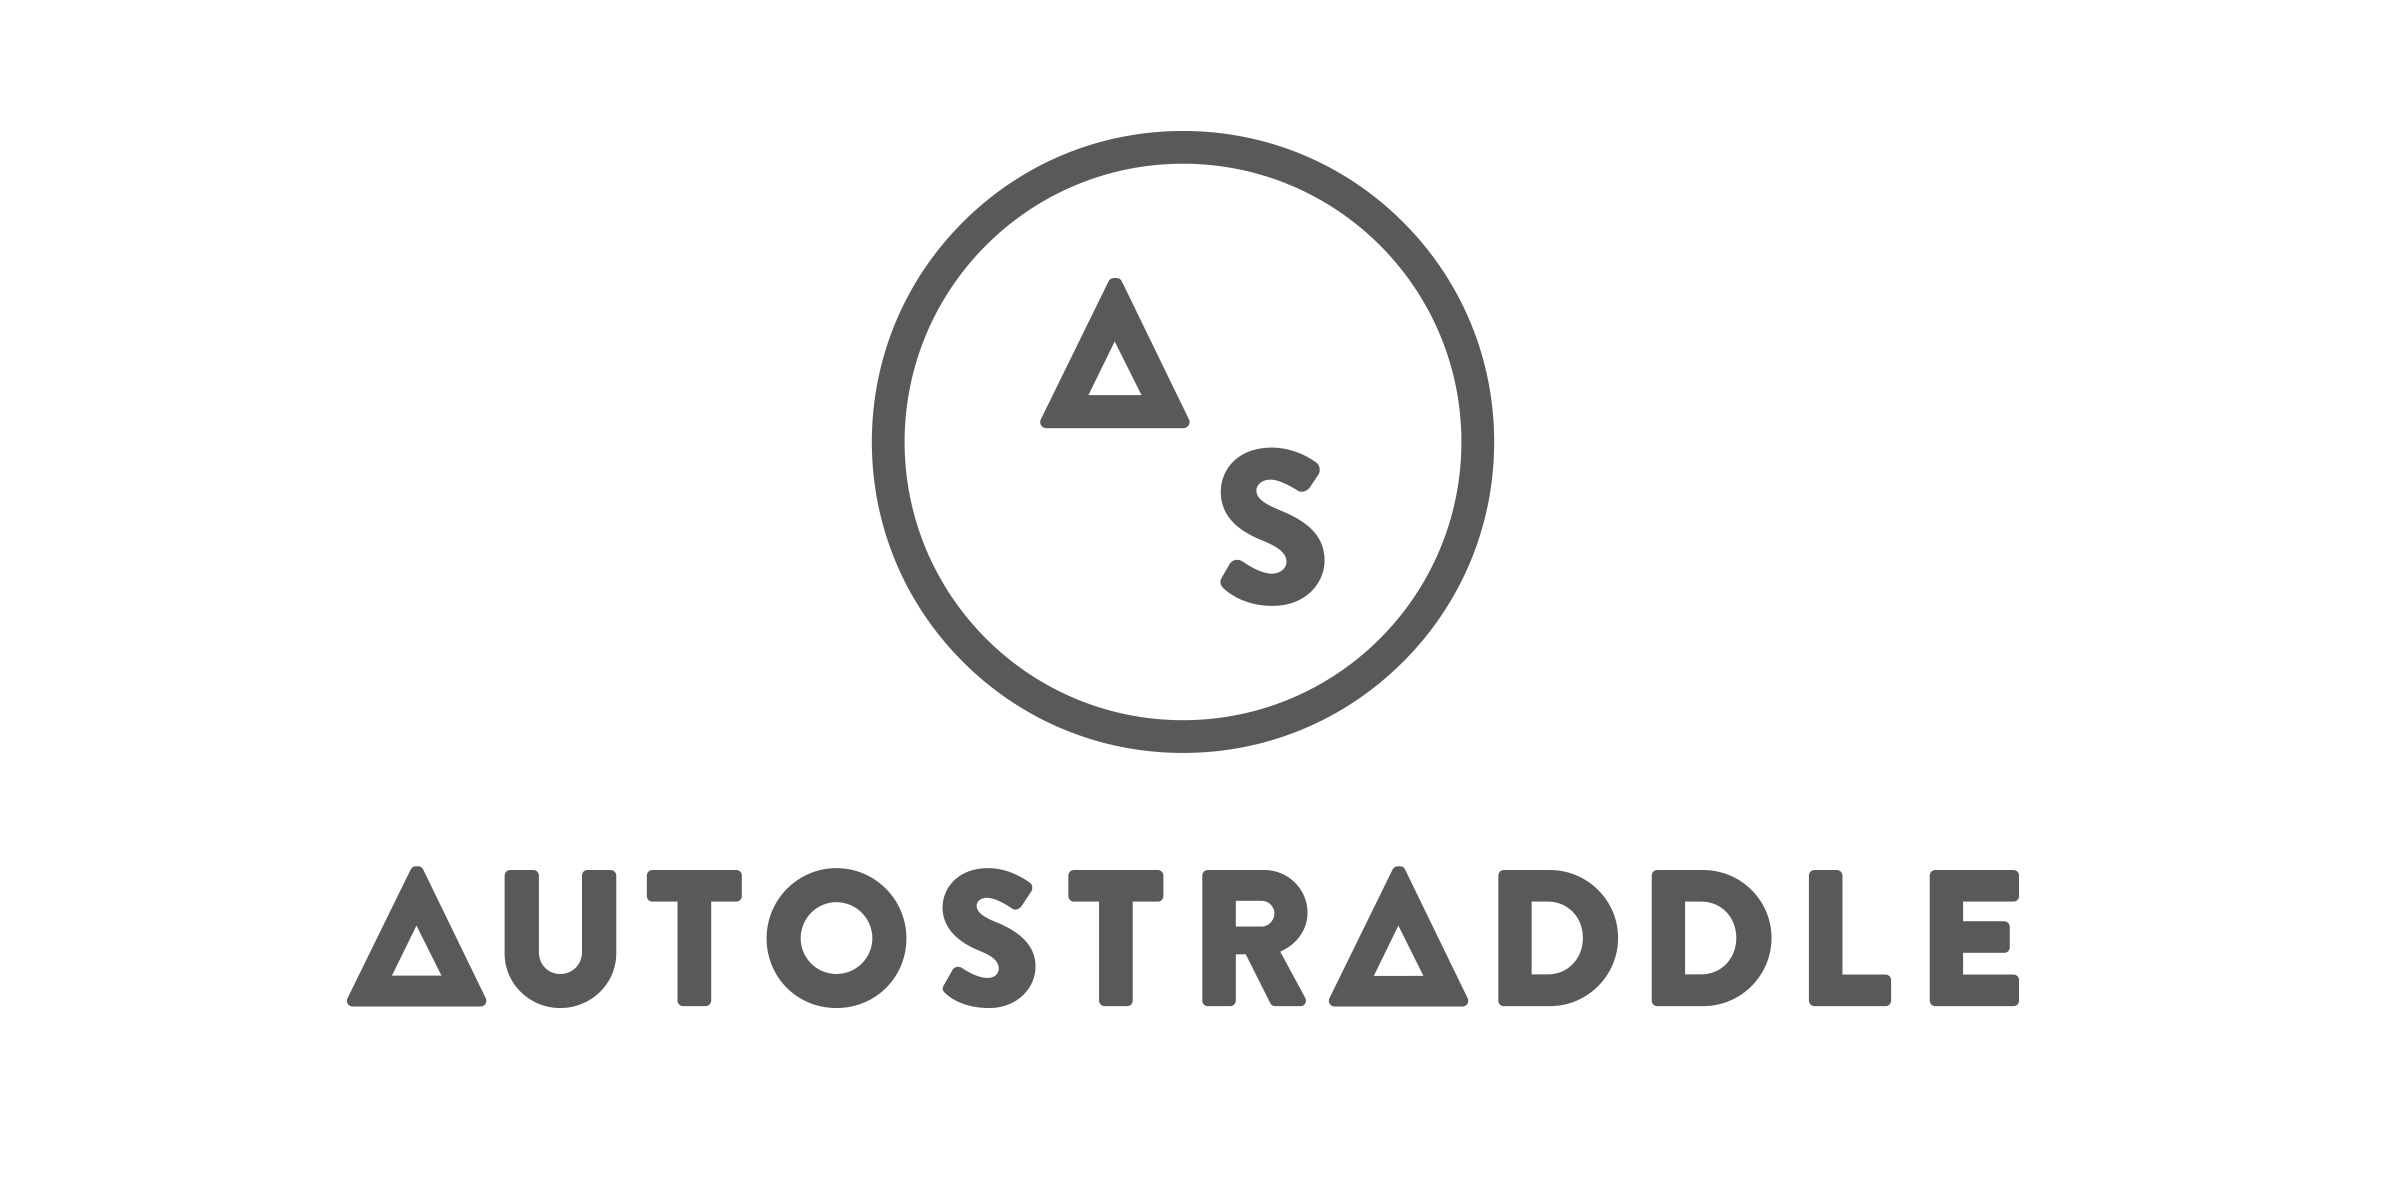 Autostraddle_logo_grey_highres.jpg